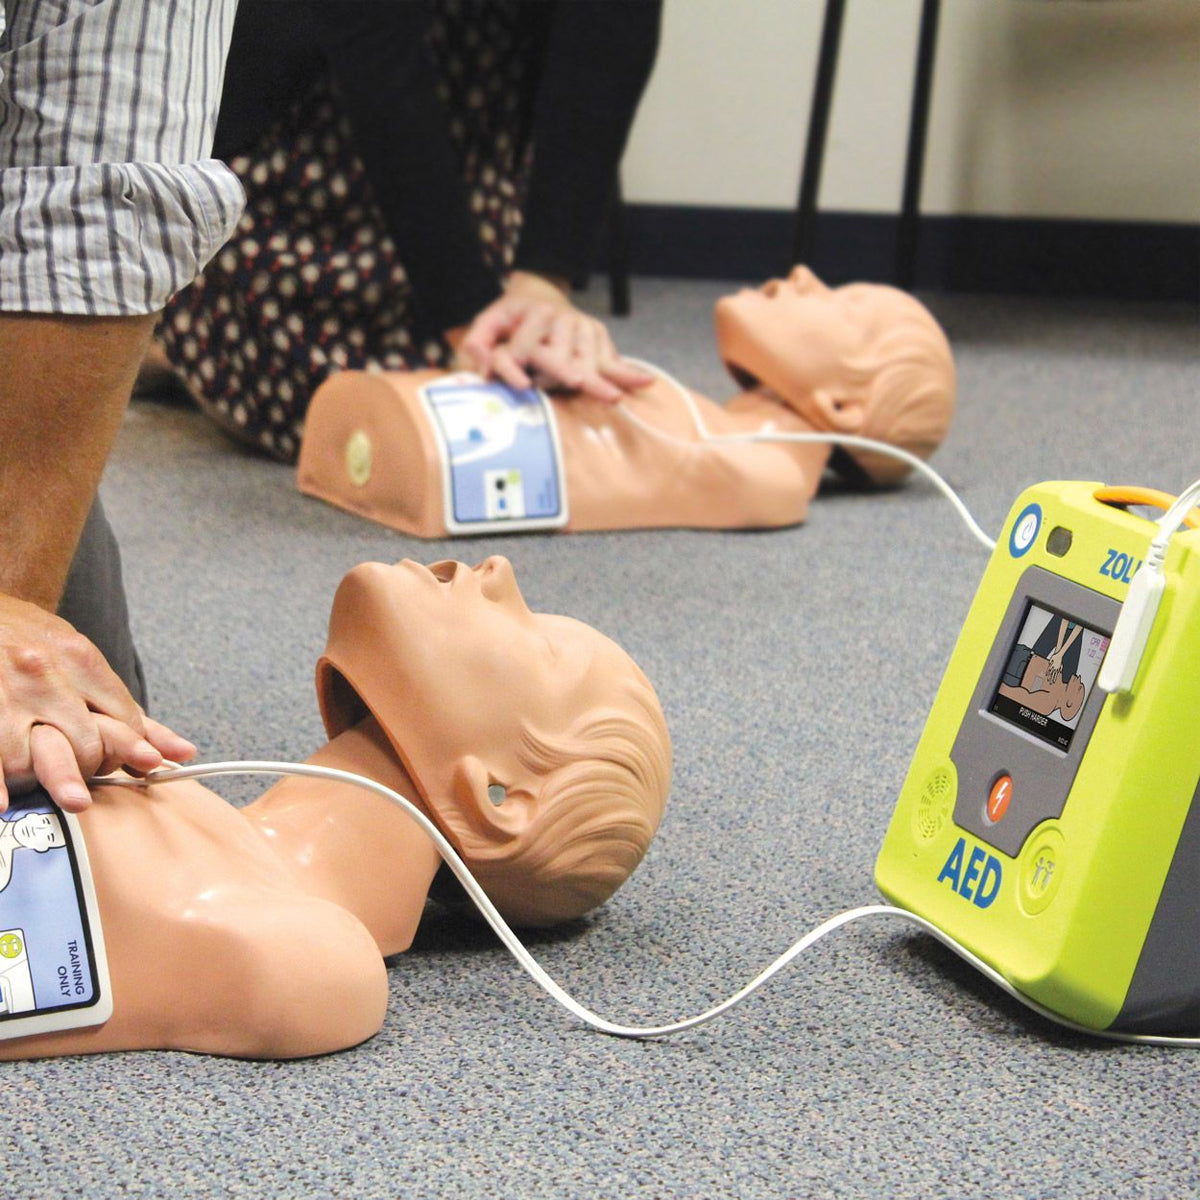 Zoll AED 3™ Trainer Defibrillator